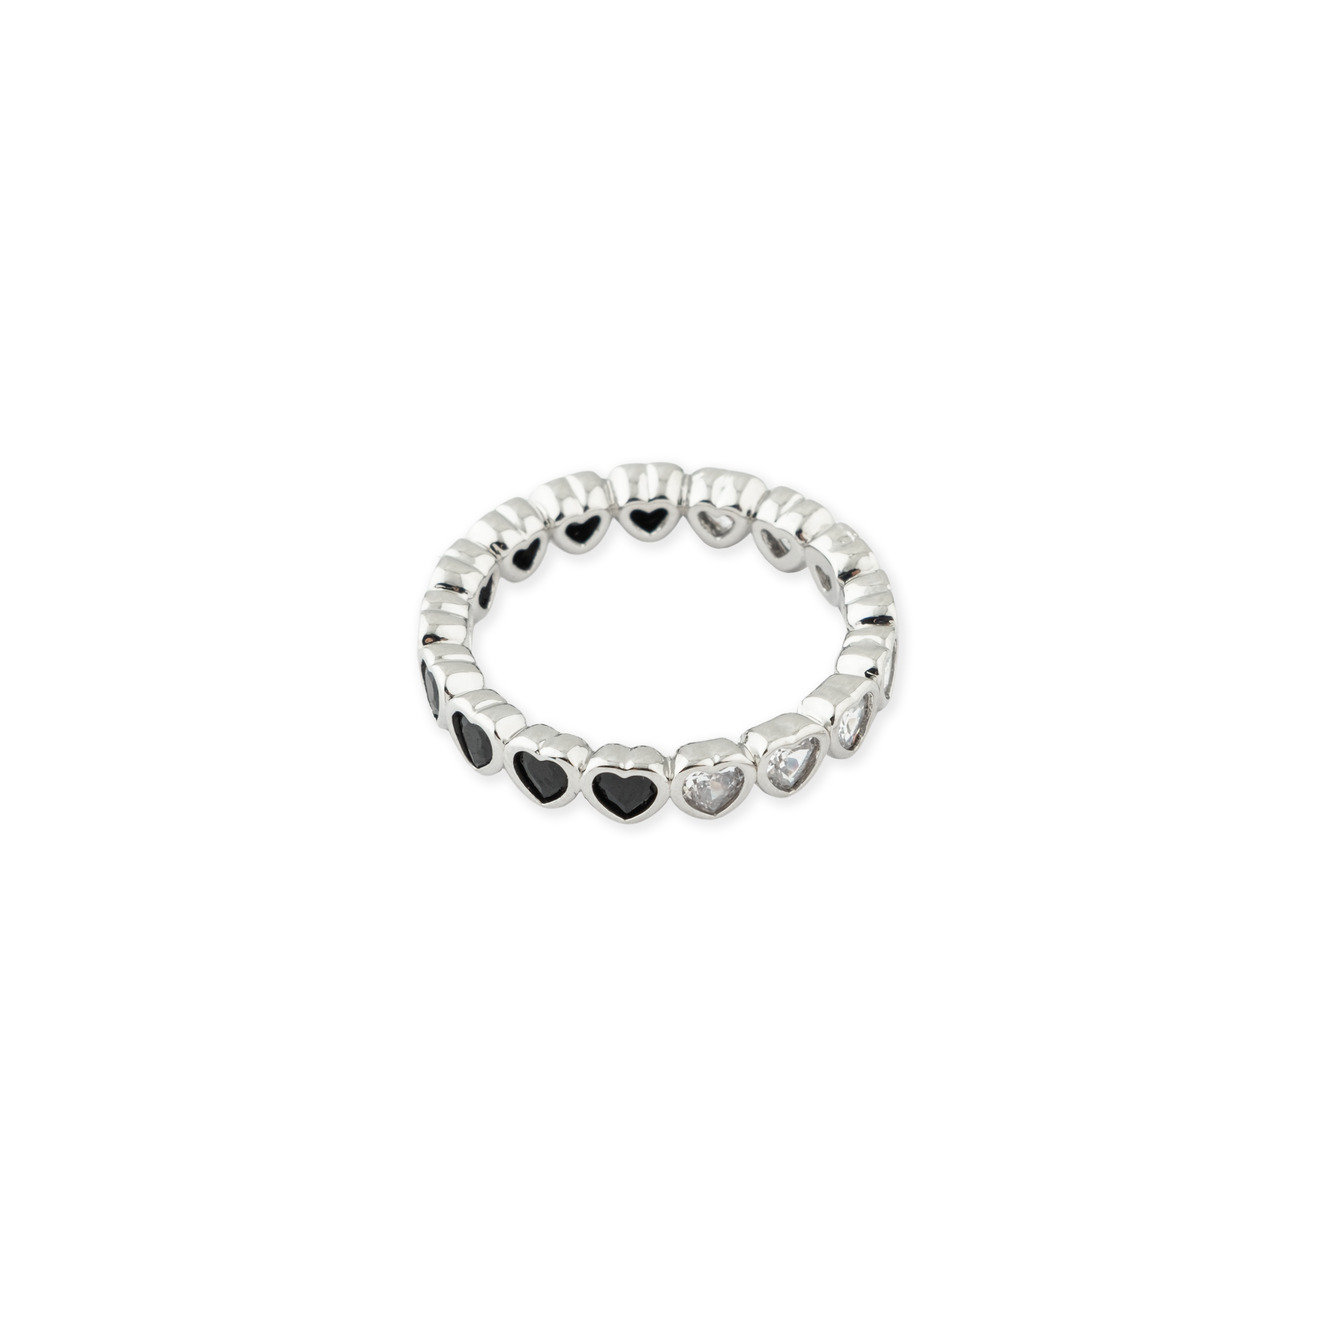 Herald Percy Серебристое кольцо из сердец с белыми и черными кристаллами herald percy серебристое незамкнутое кольцо с кристаллами